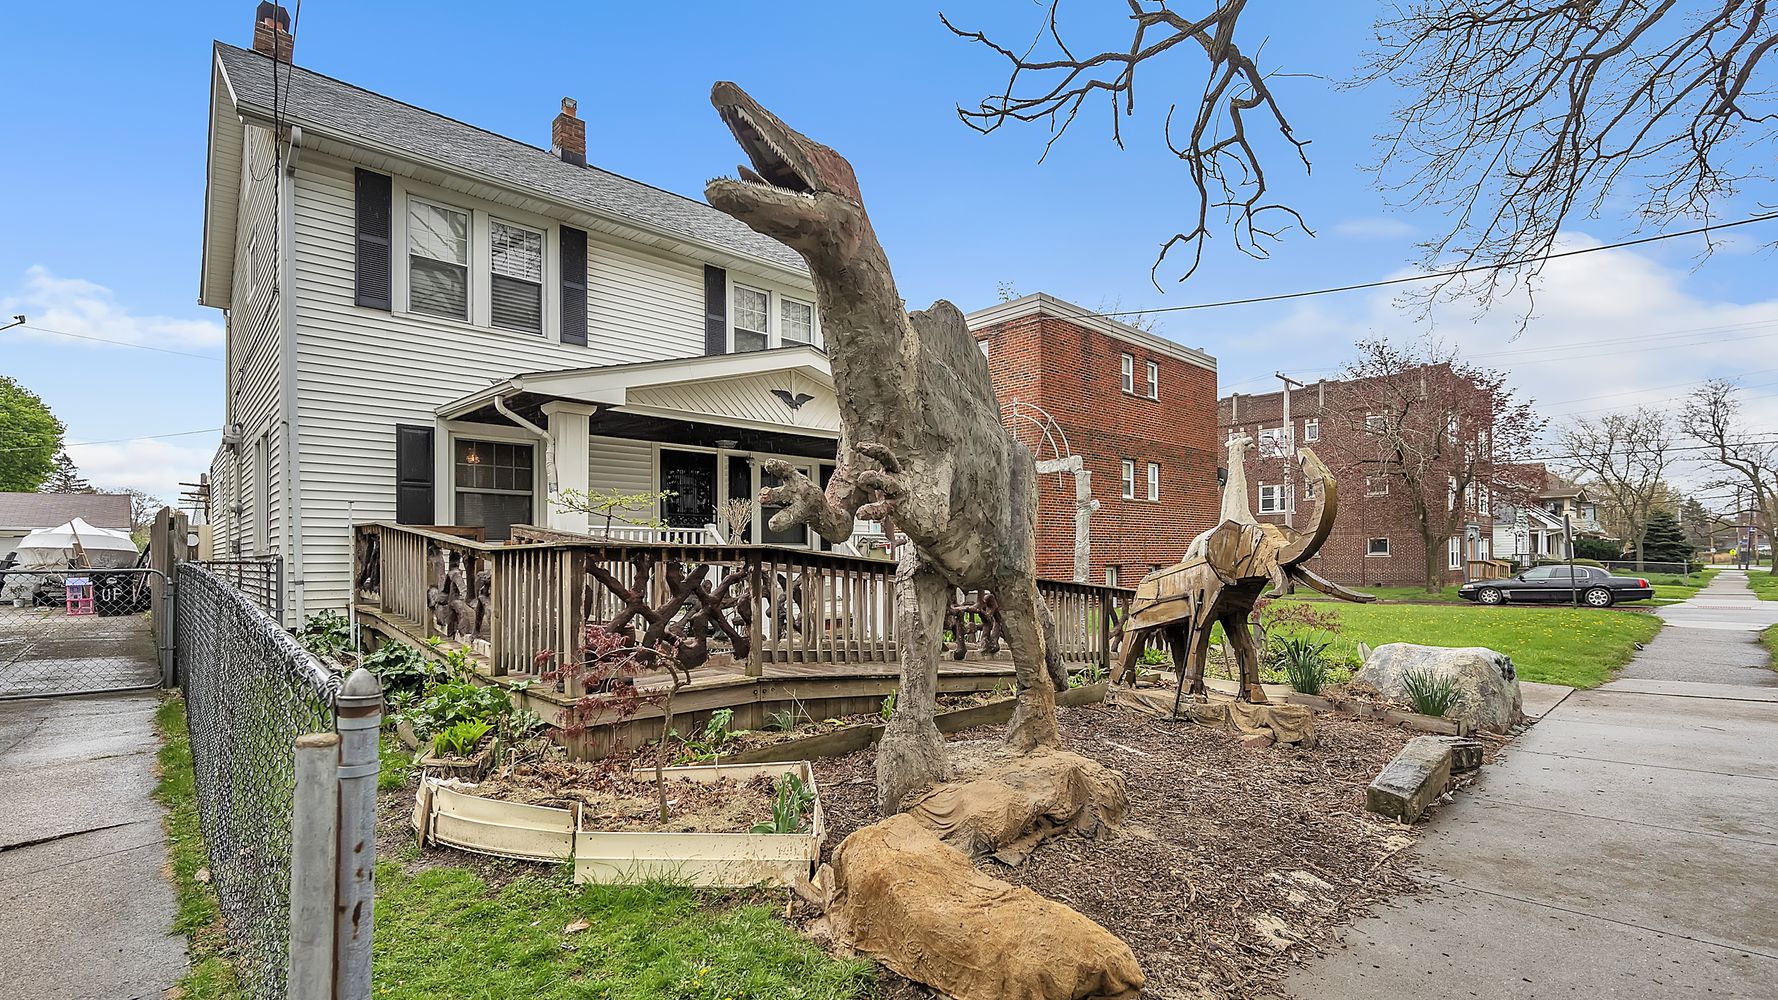 Massive Dinosaur Statue Makes Ohio Home Look Prehistoric